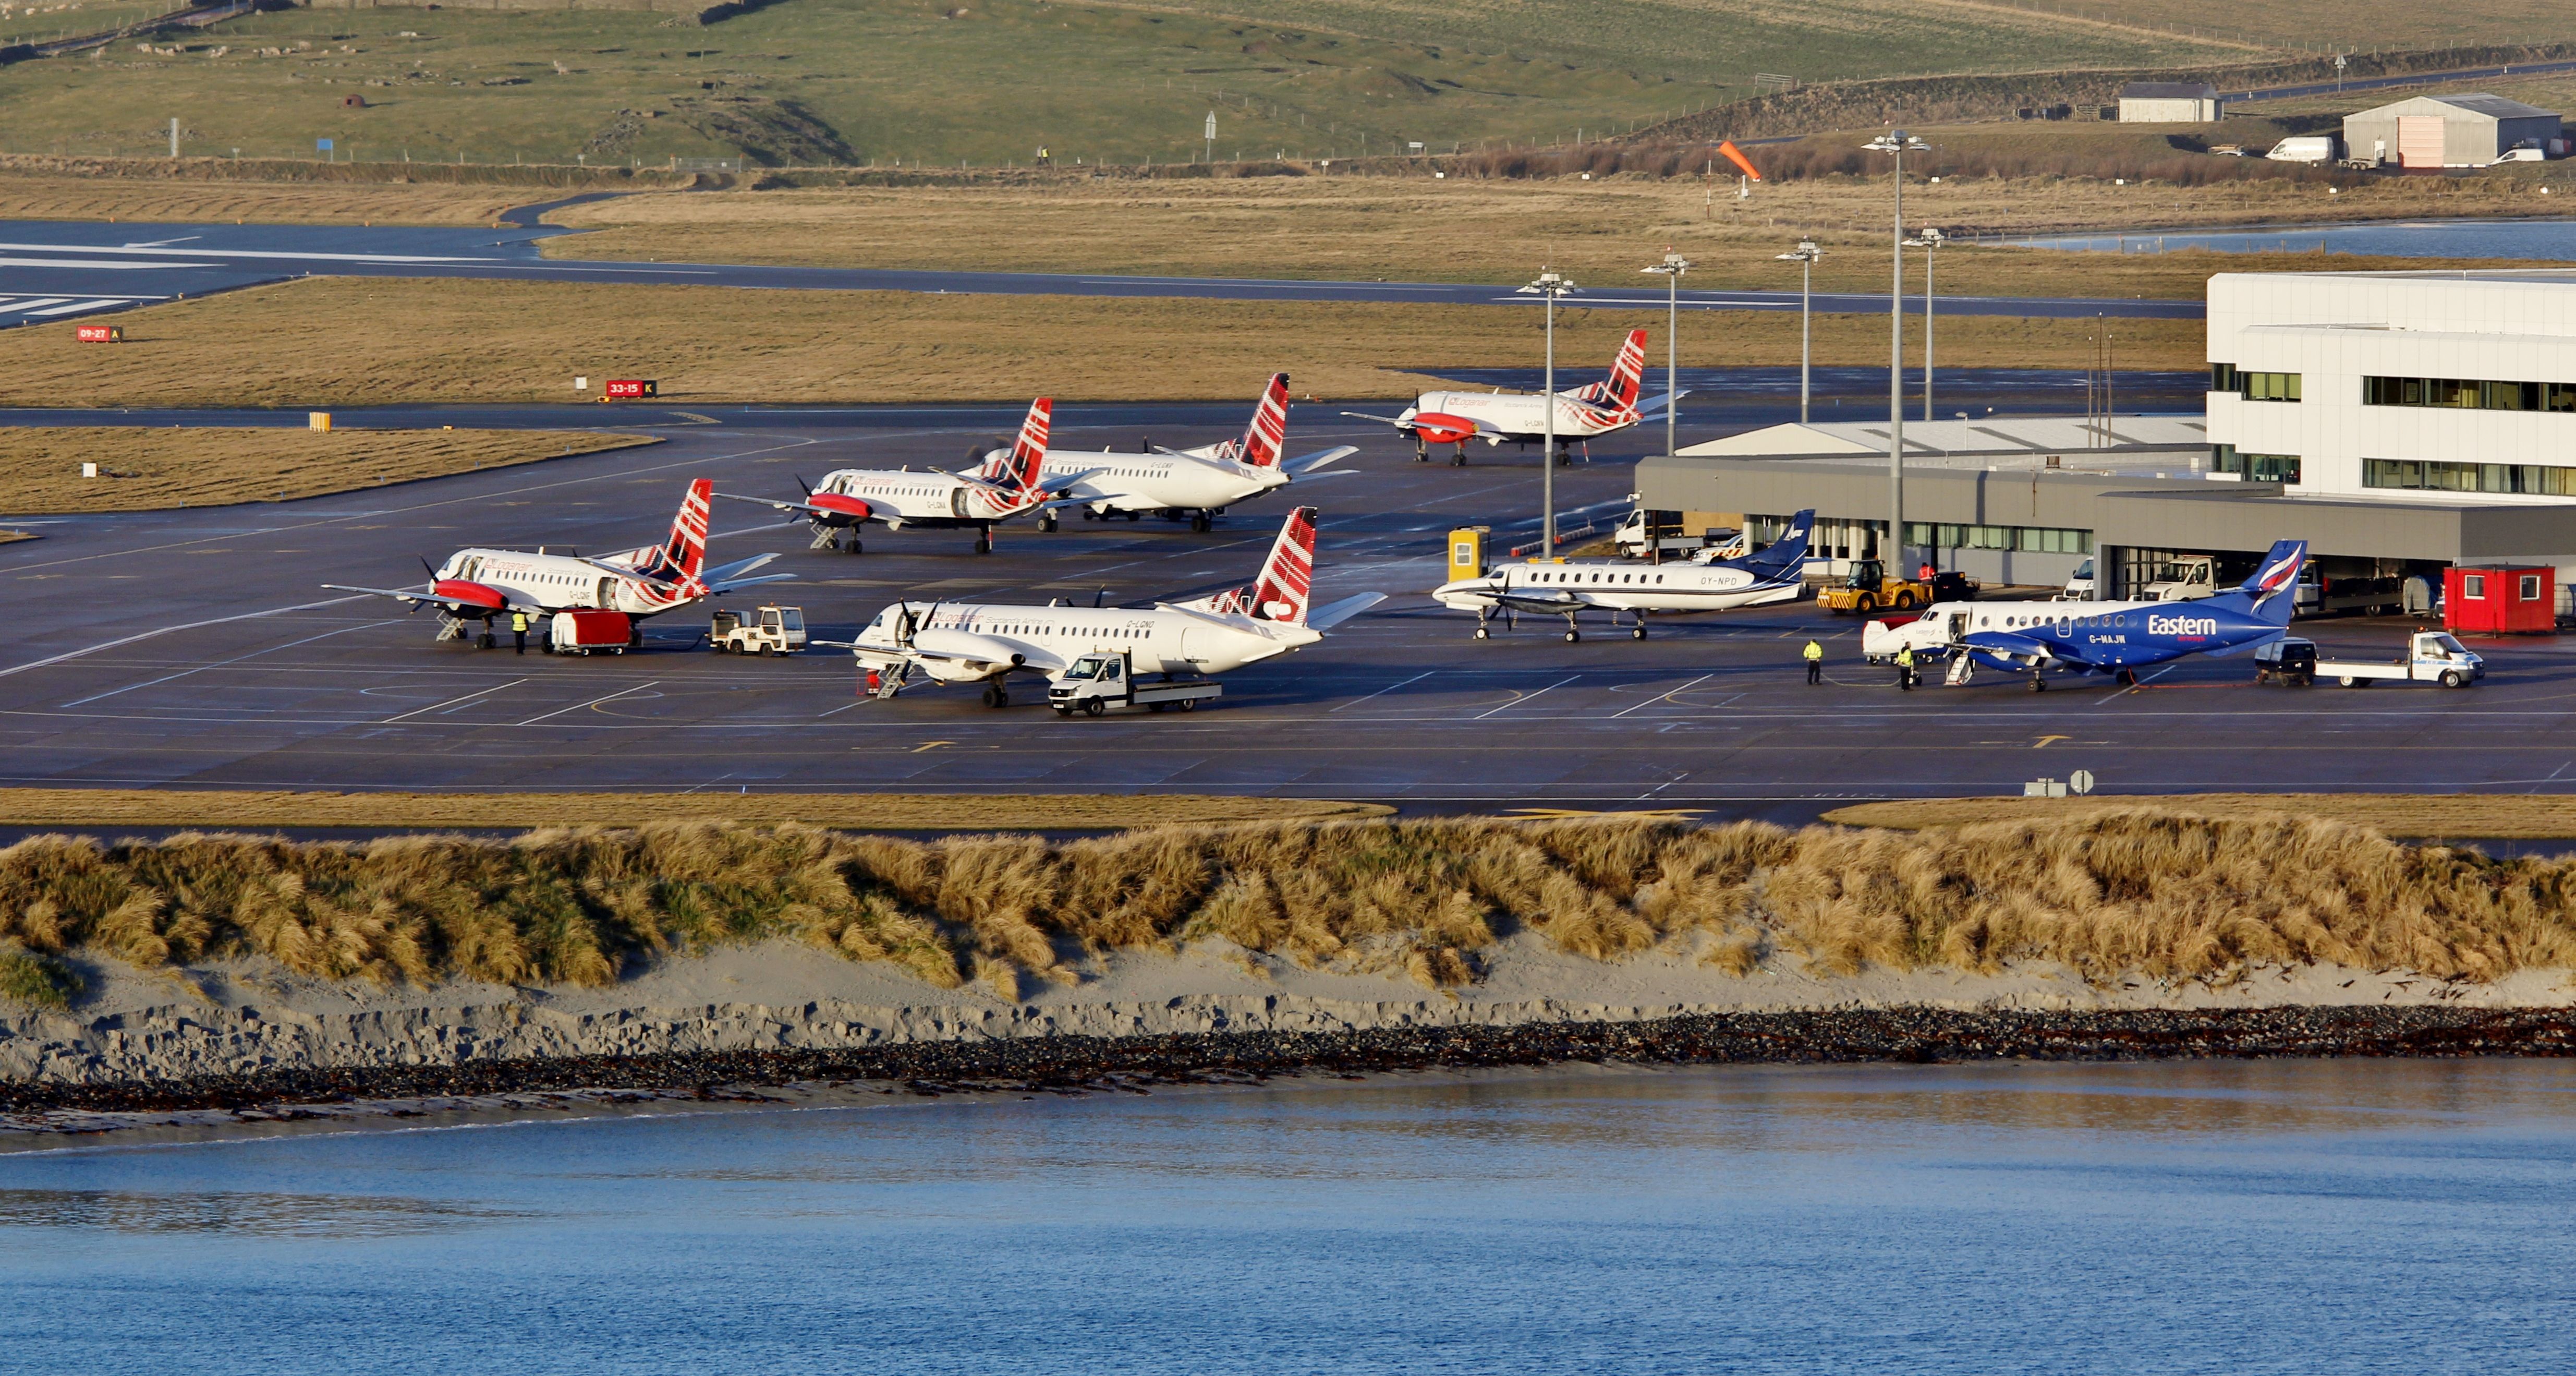 A few Loganair aircraft parked at an airport in Scotland.